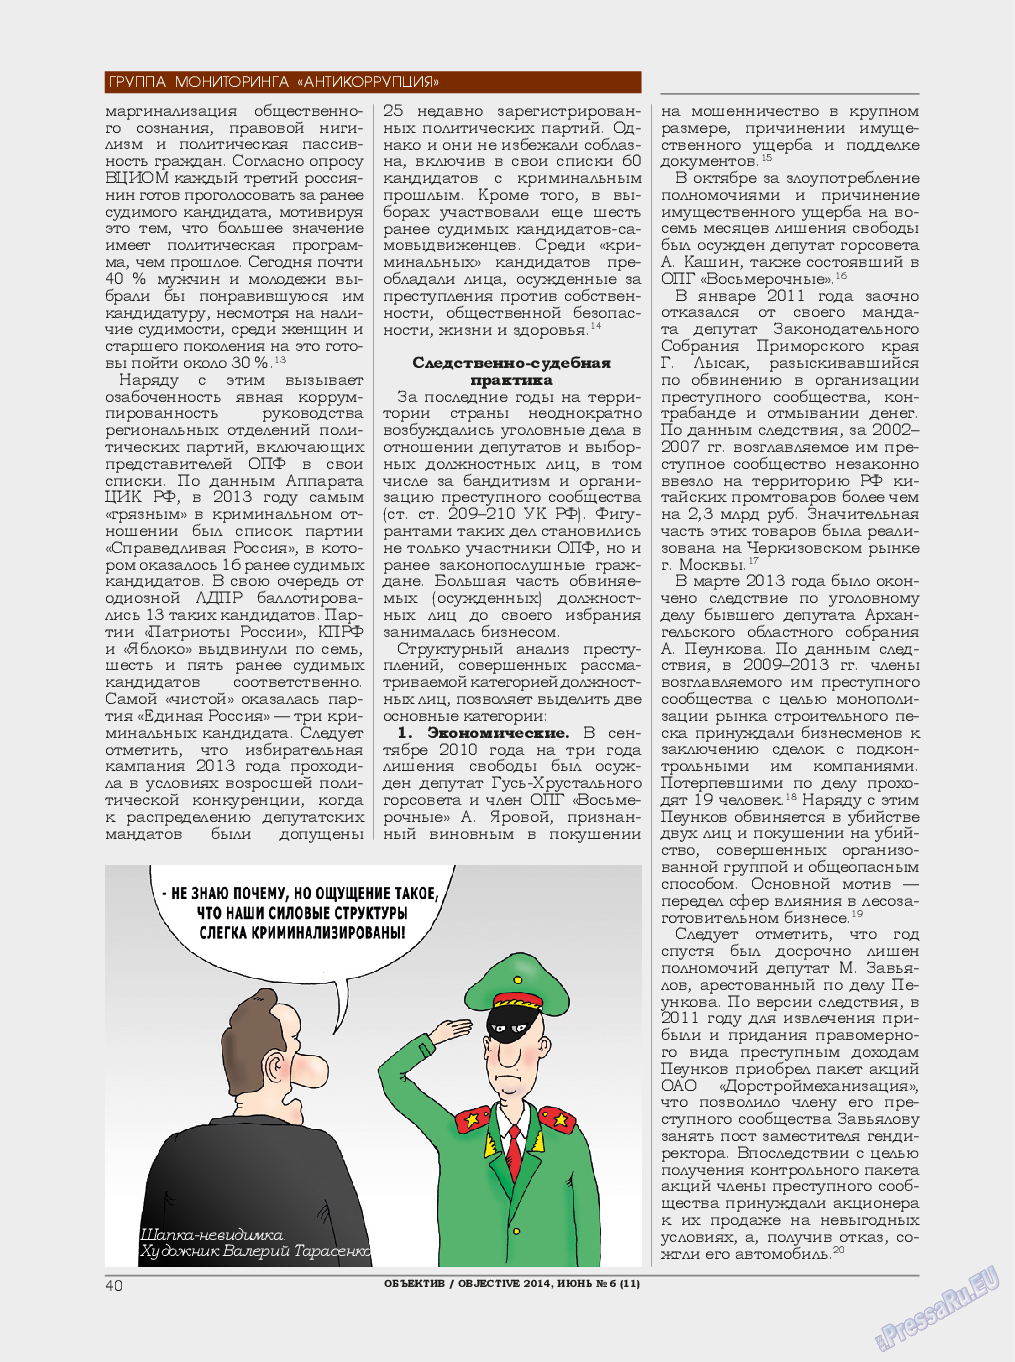 Объектив EU, журнал. 2014 №6 стр.40